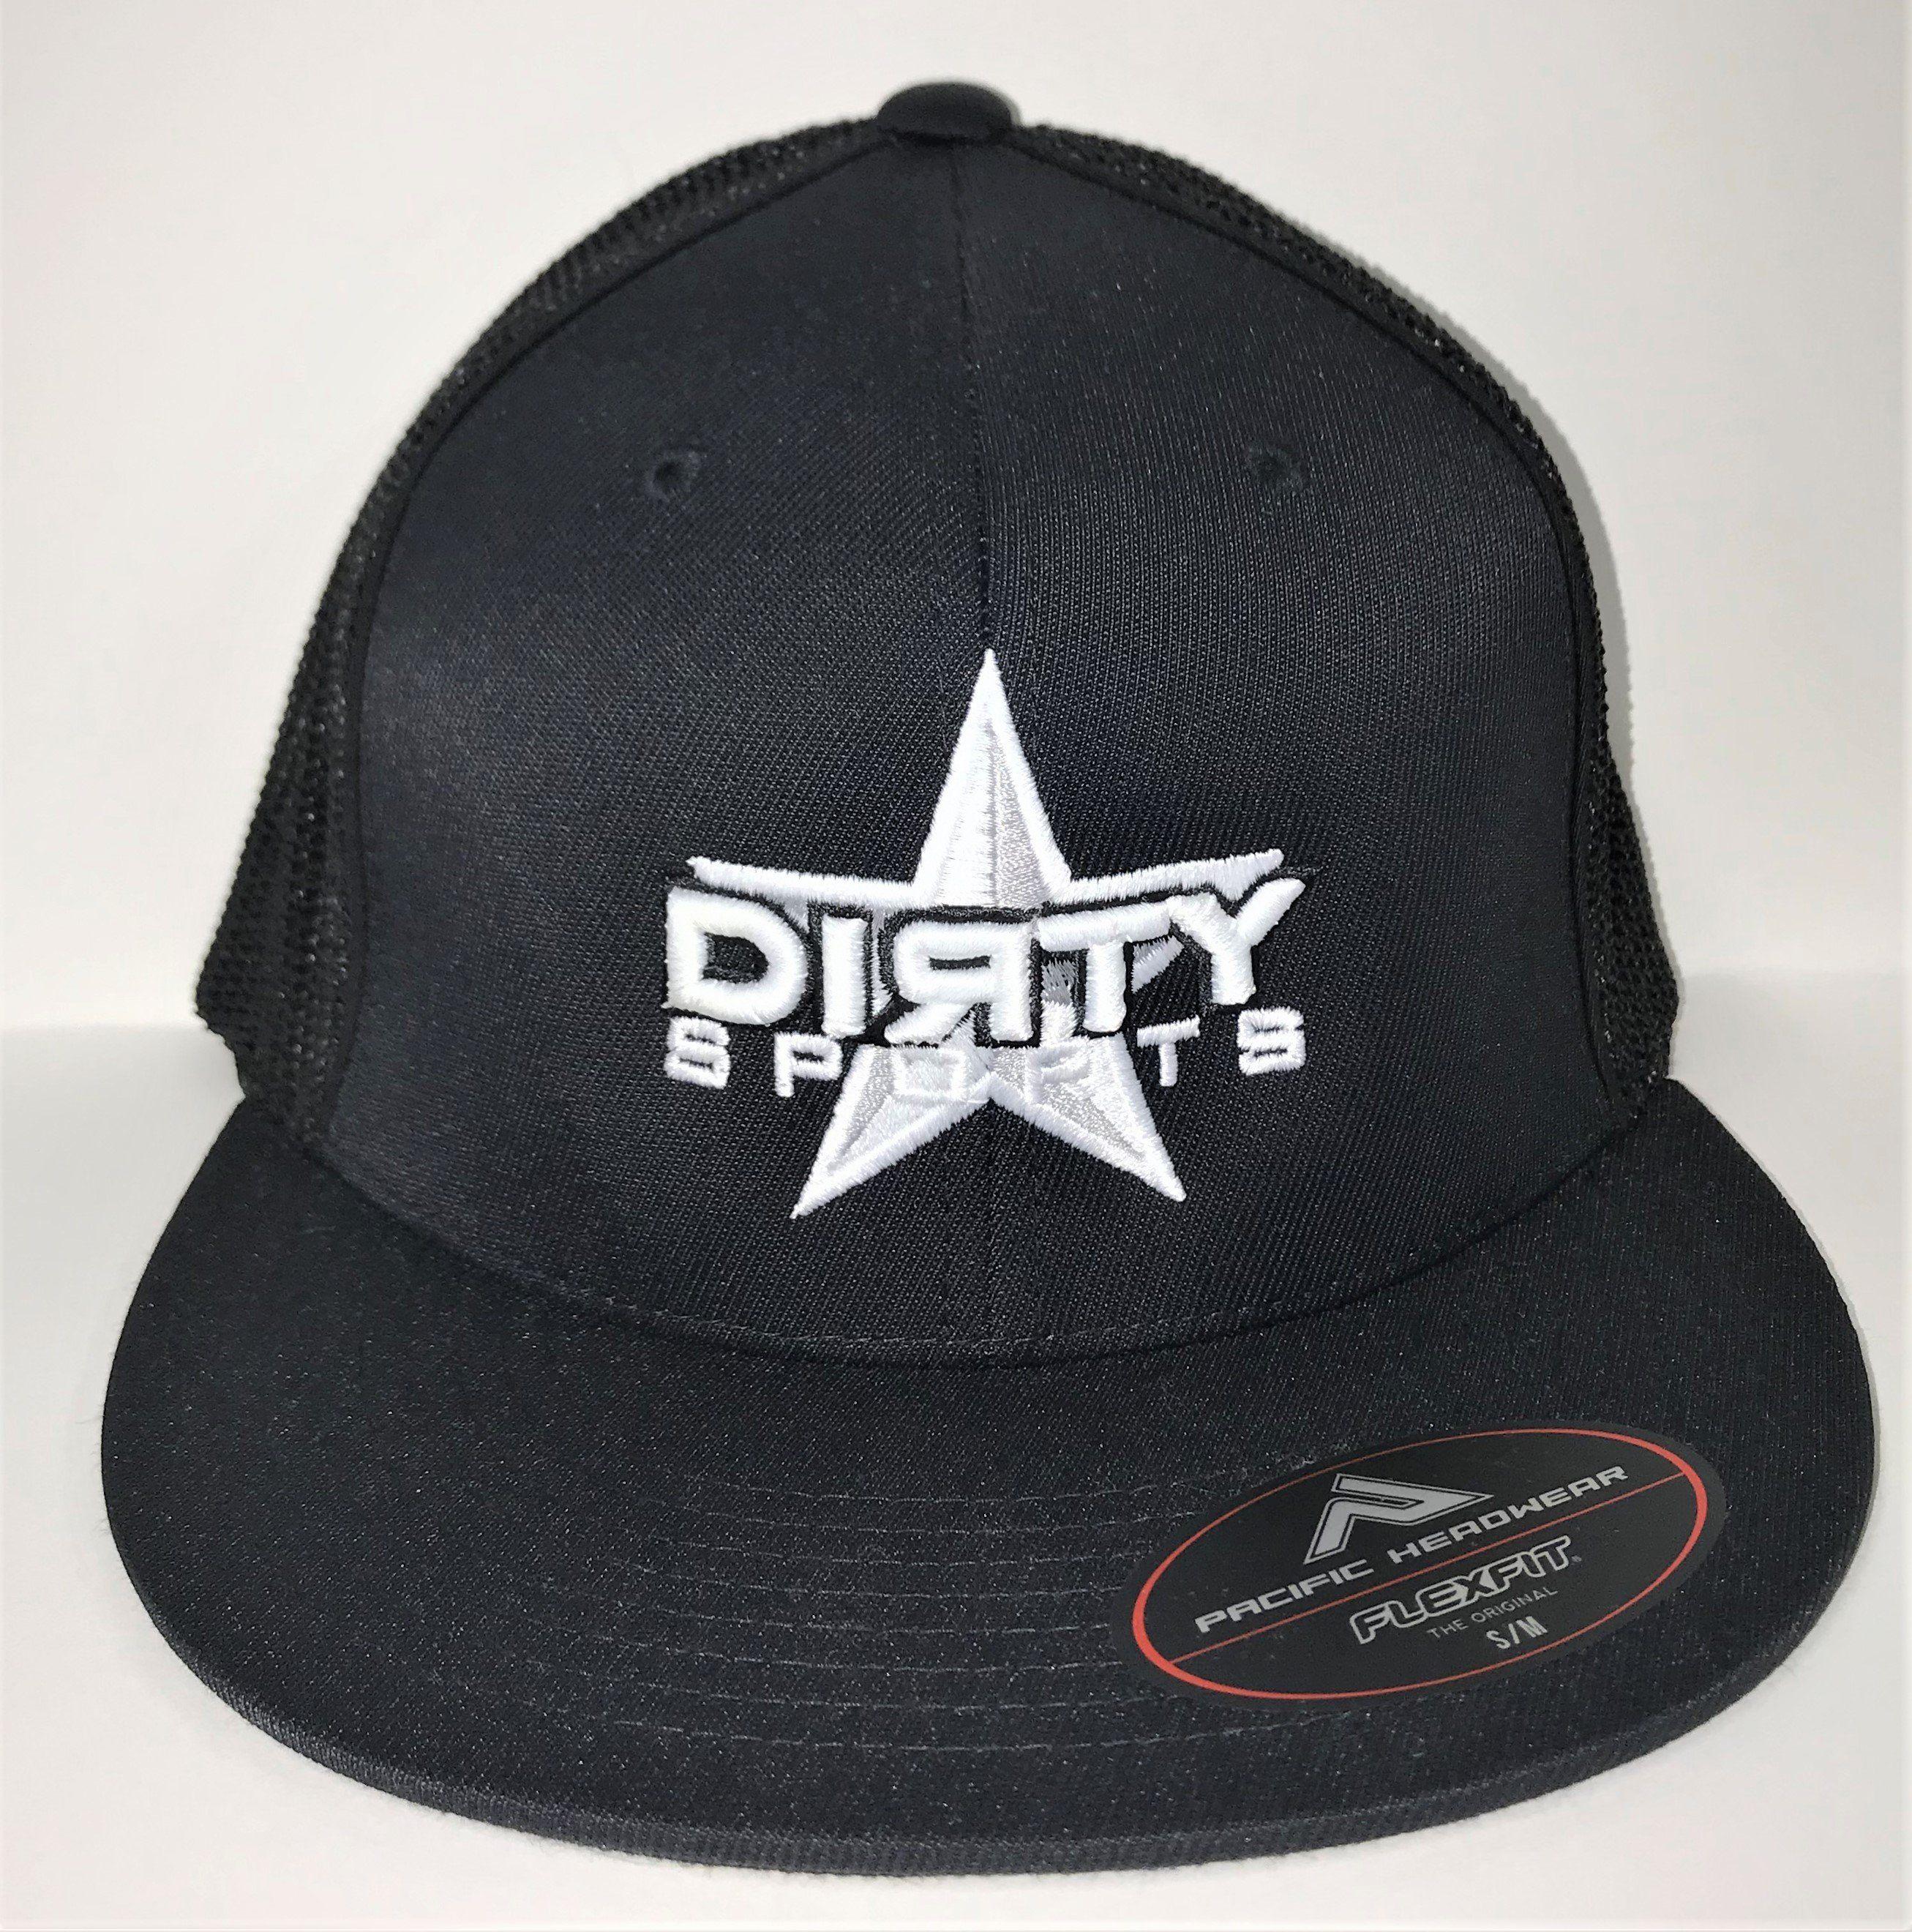 Gray Star Logo - Black Mesh Hat & Gray Dirty Star Logo